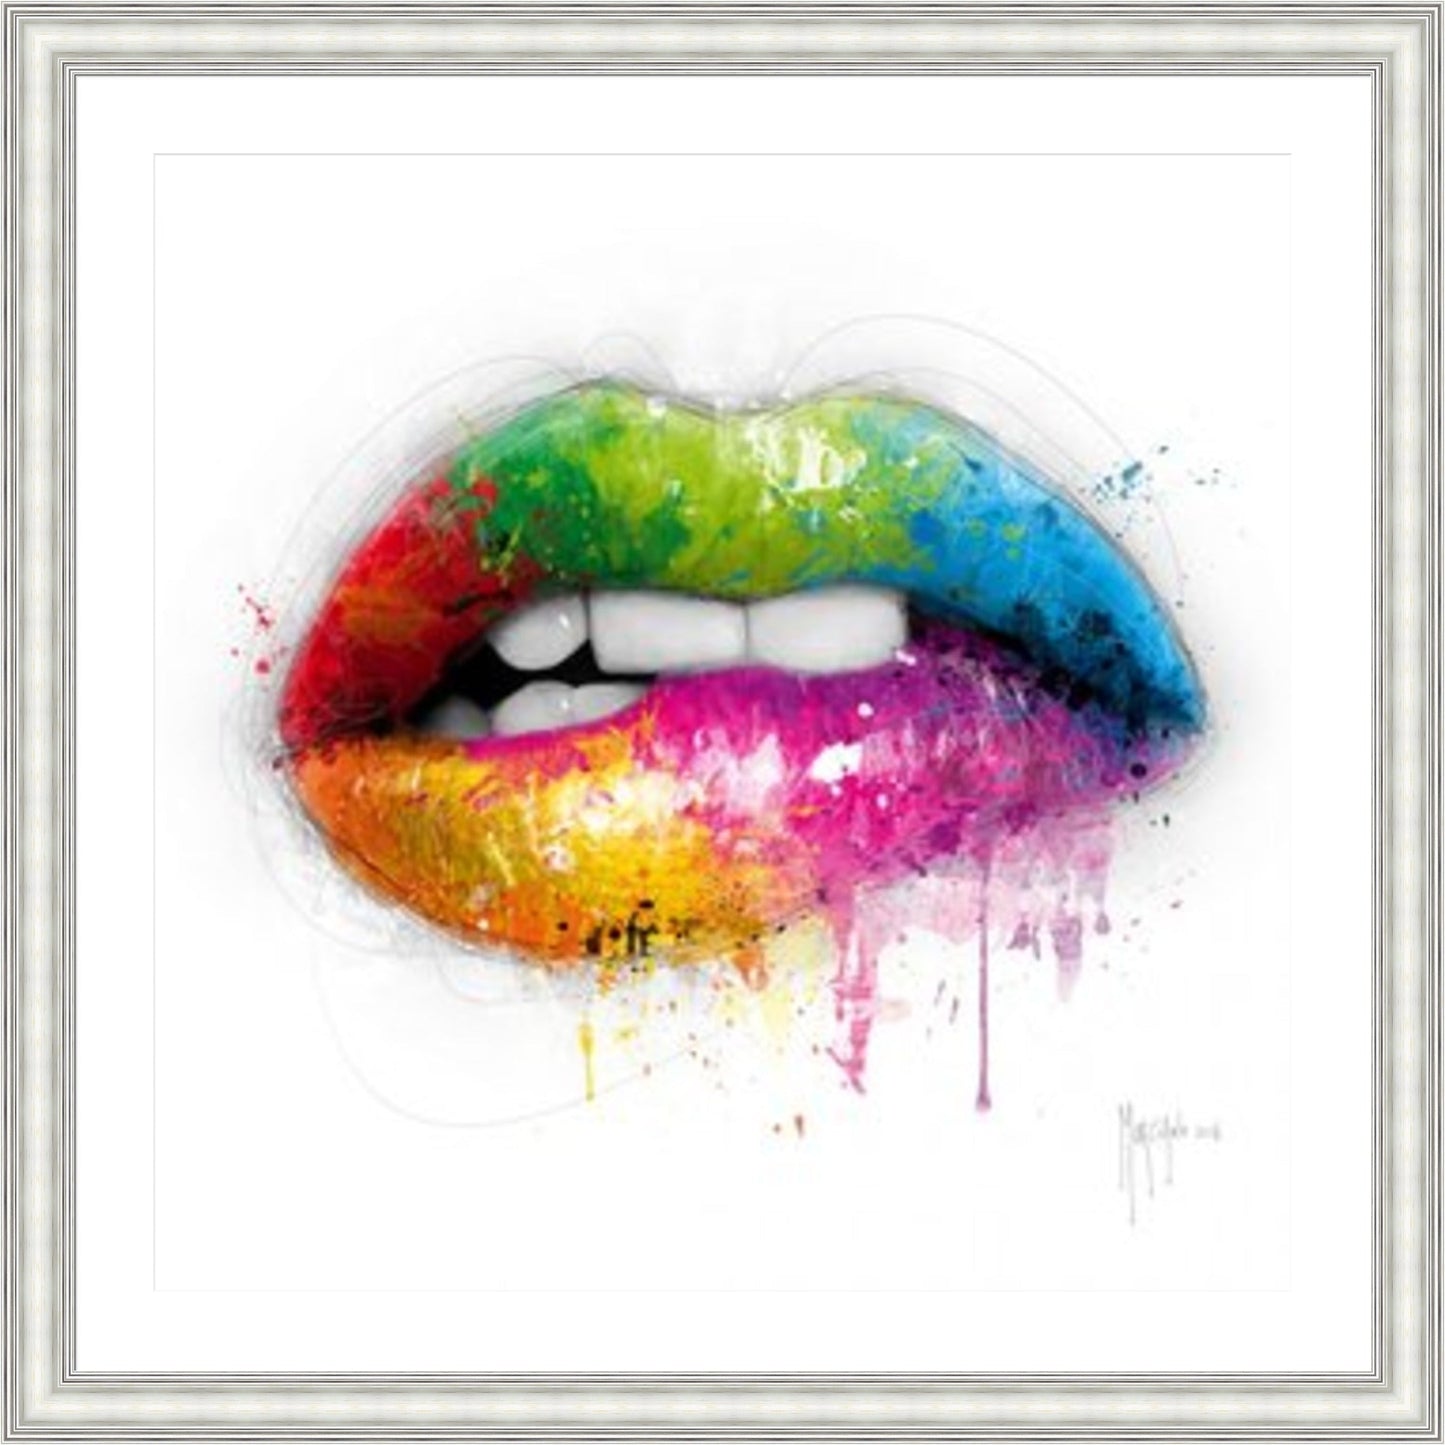 Lipstick by Patrice Murciano